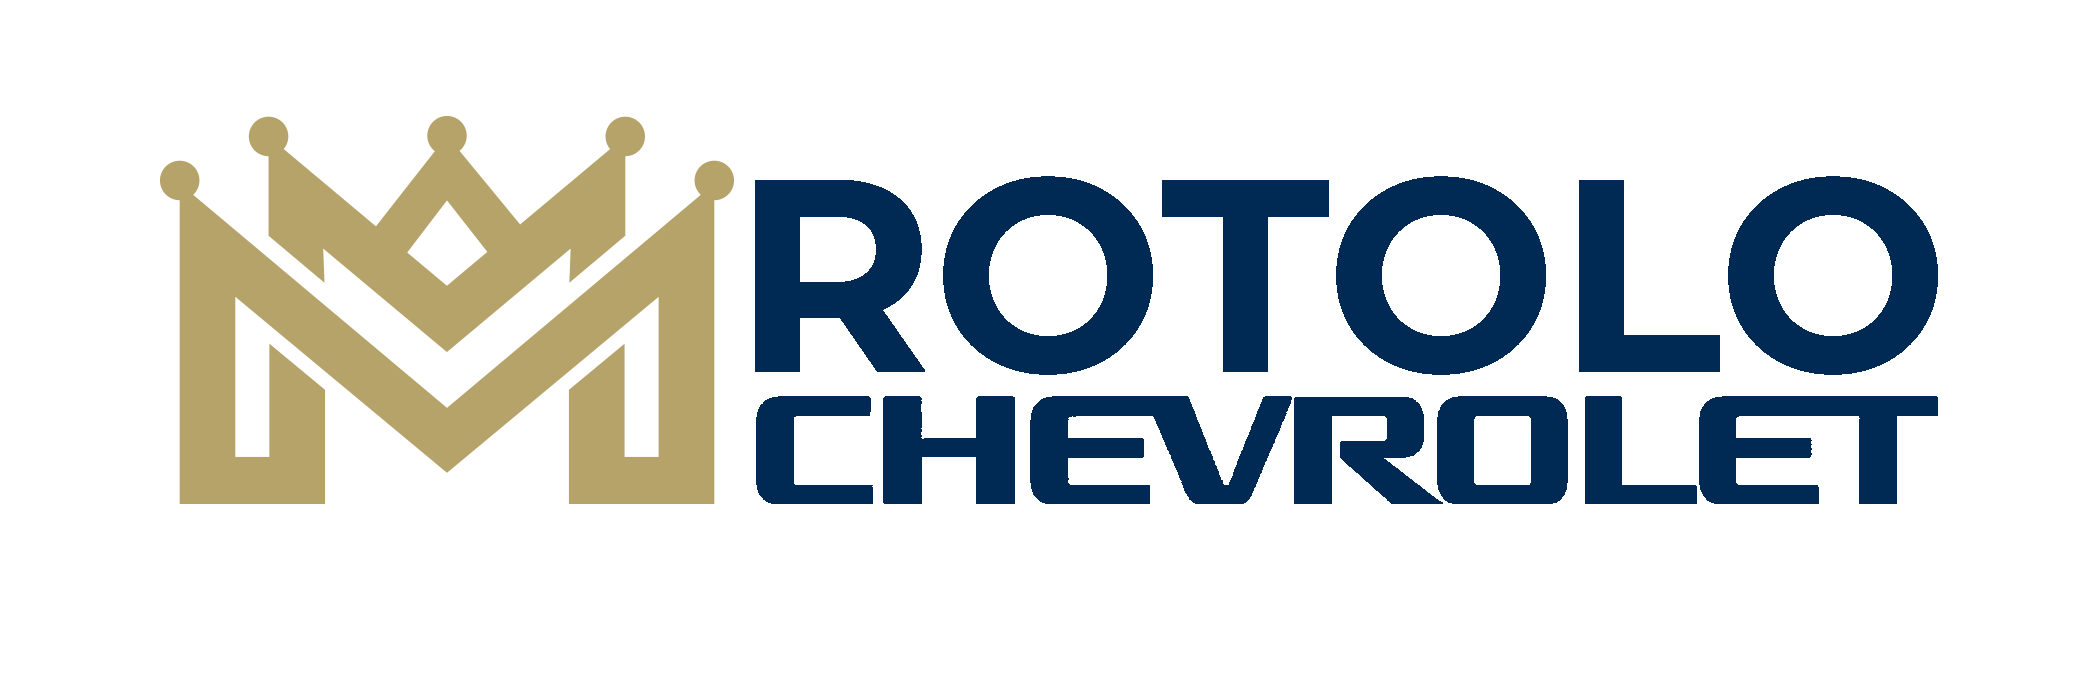 New & Used Chevrolet Dealer, Rancho Cucamonga, Riverside, Ontario &  Fontana